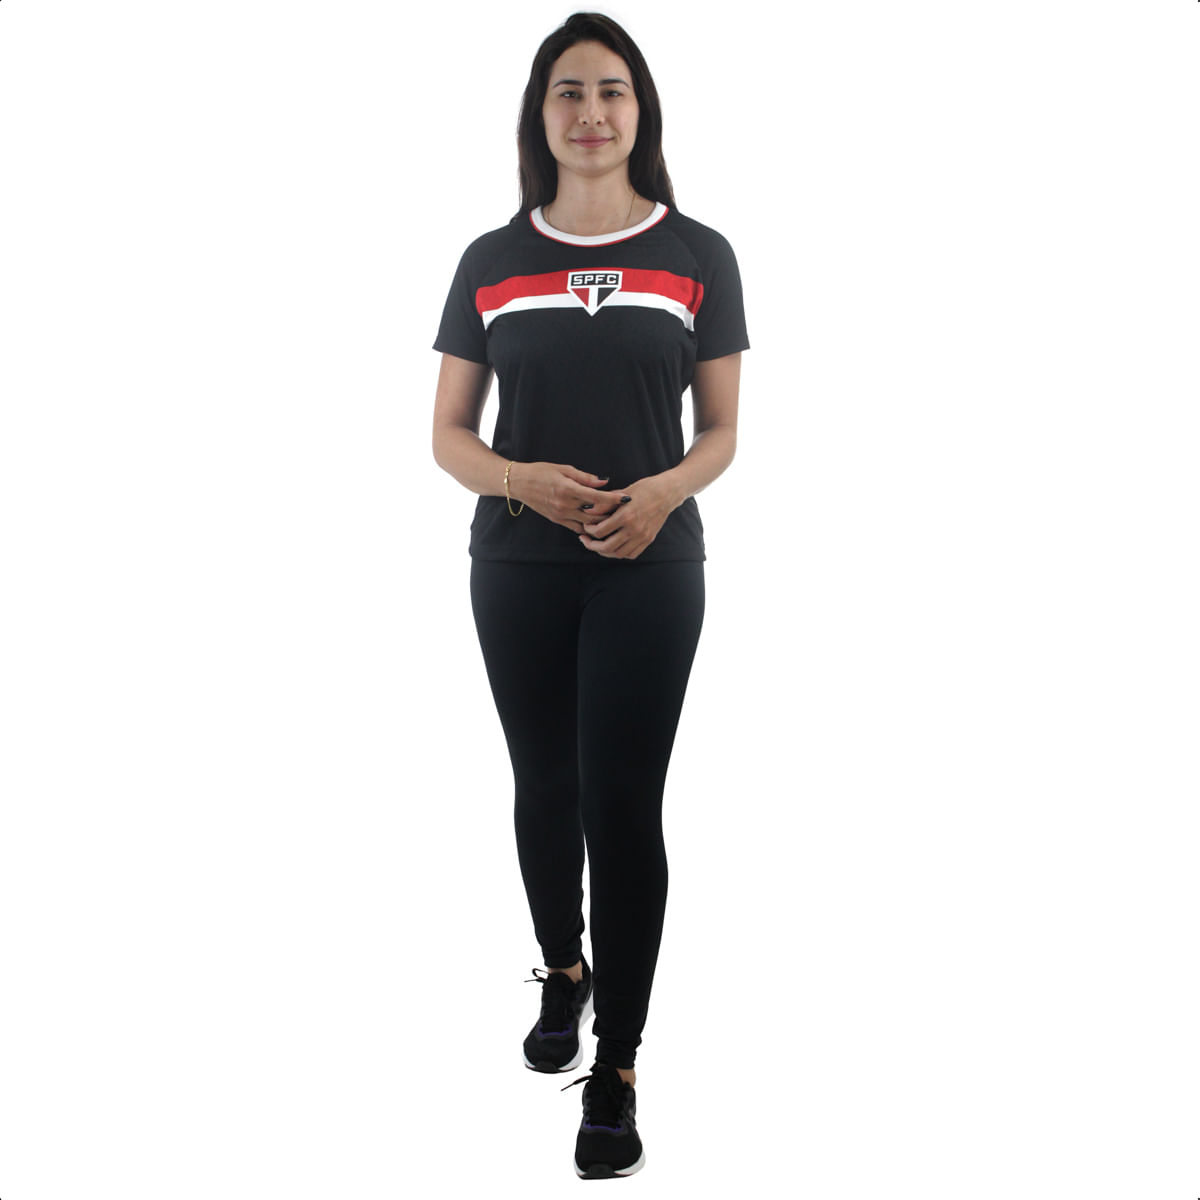 Camiseta Canyoning Cor Preta - Spelaion - Camiseta Feminina - Magazine Luiza